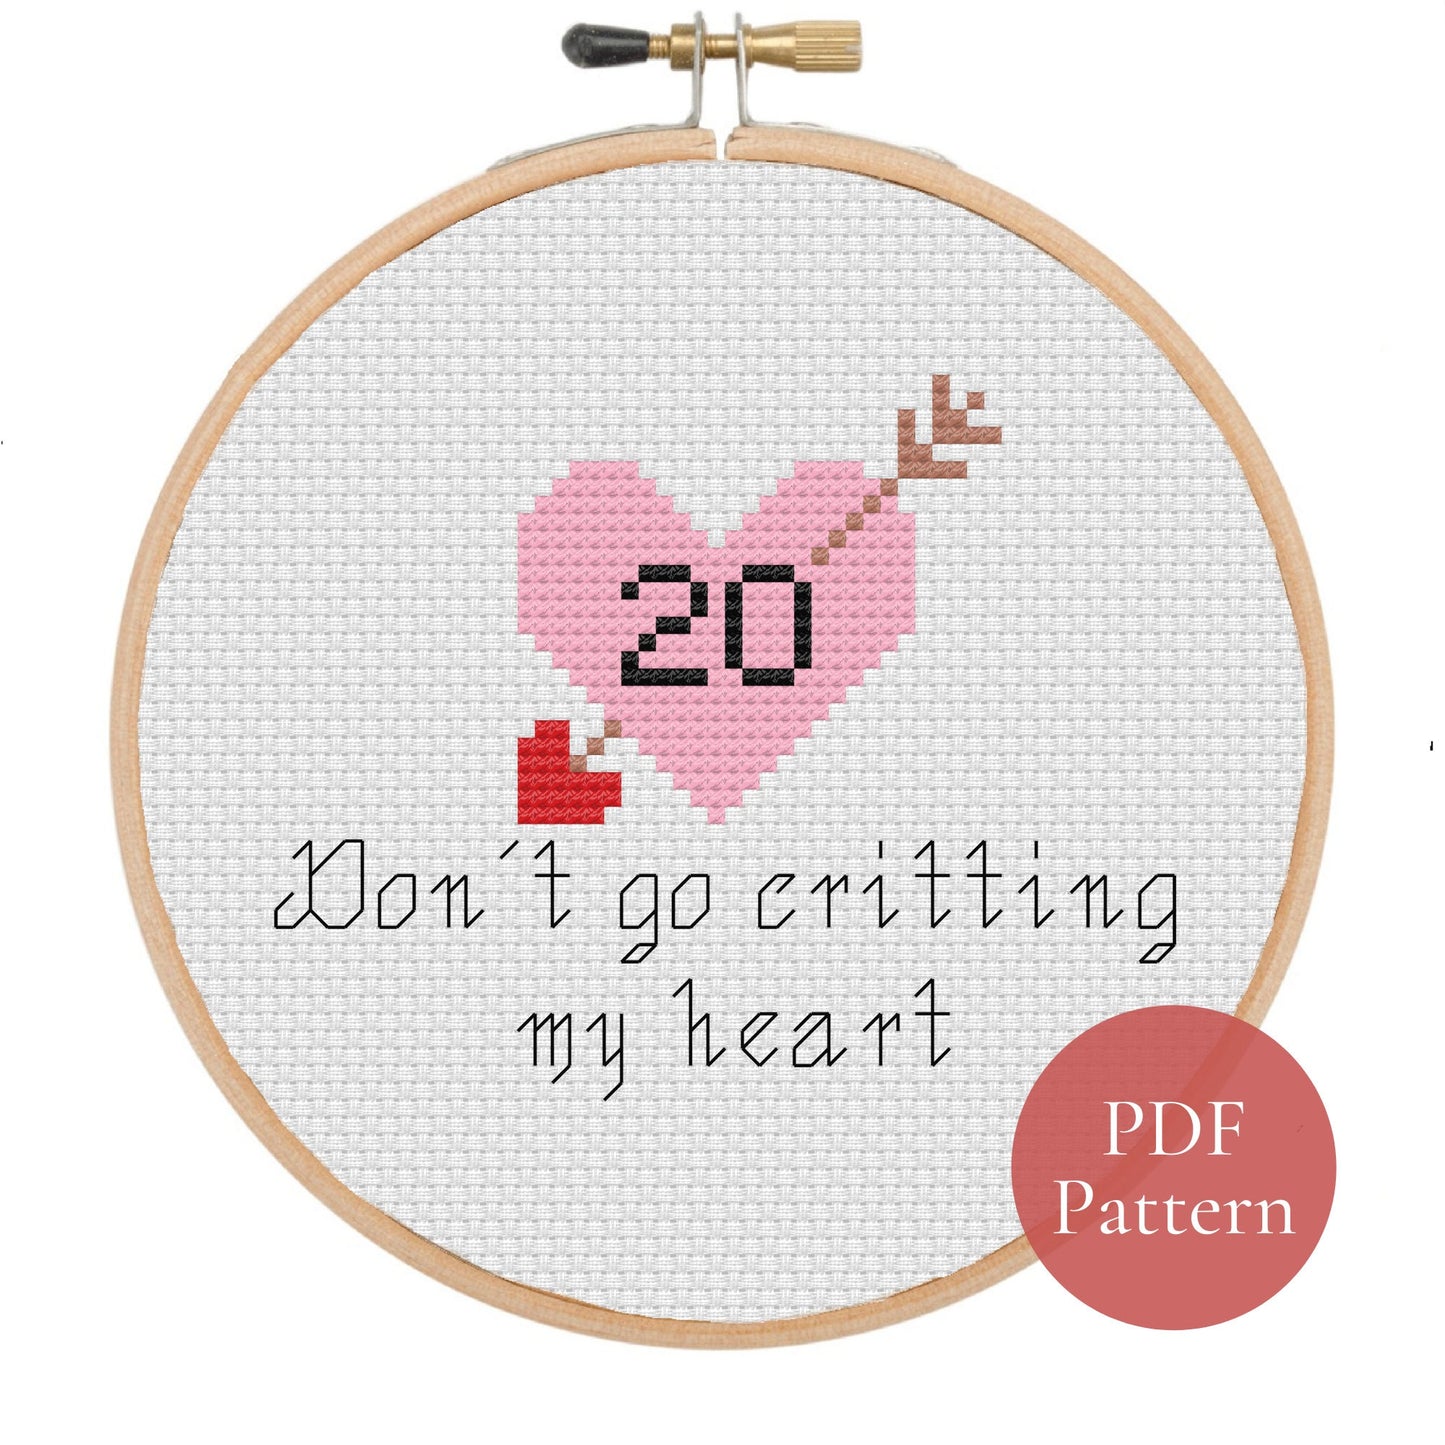 Don't go critting my heart - You got a Crit on my heart - Nerdy heart cross stitch